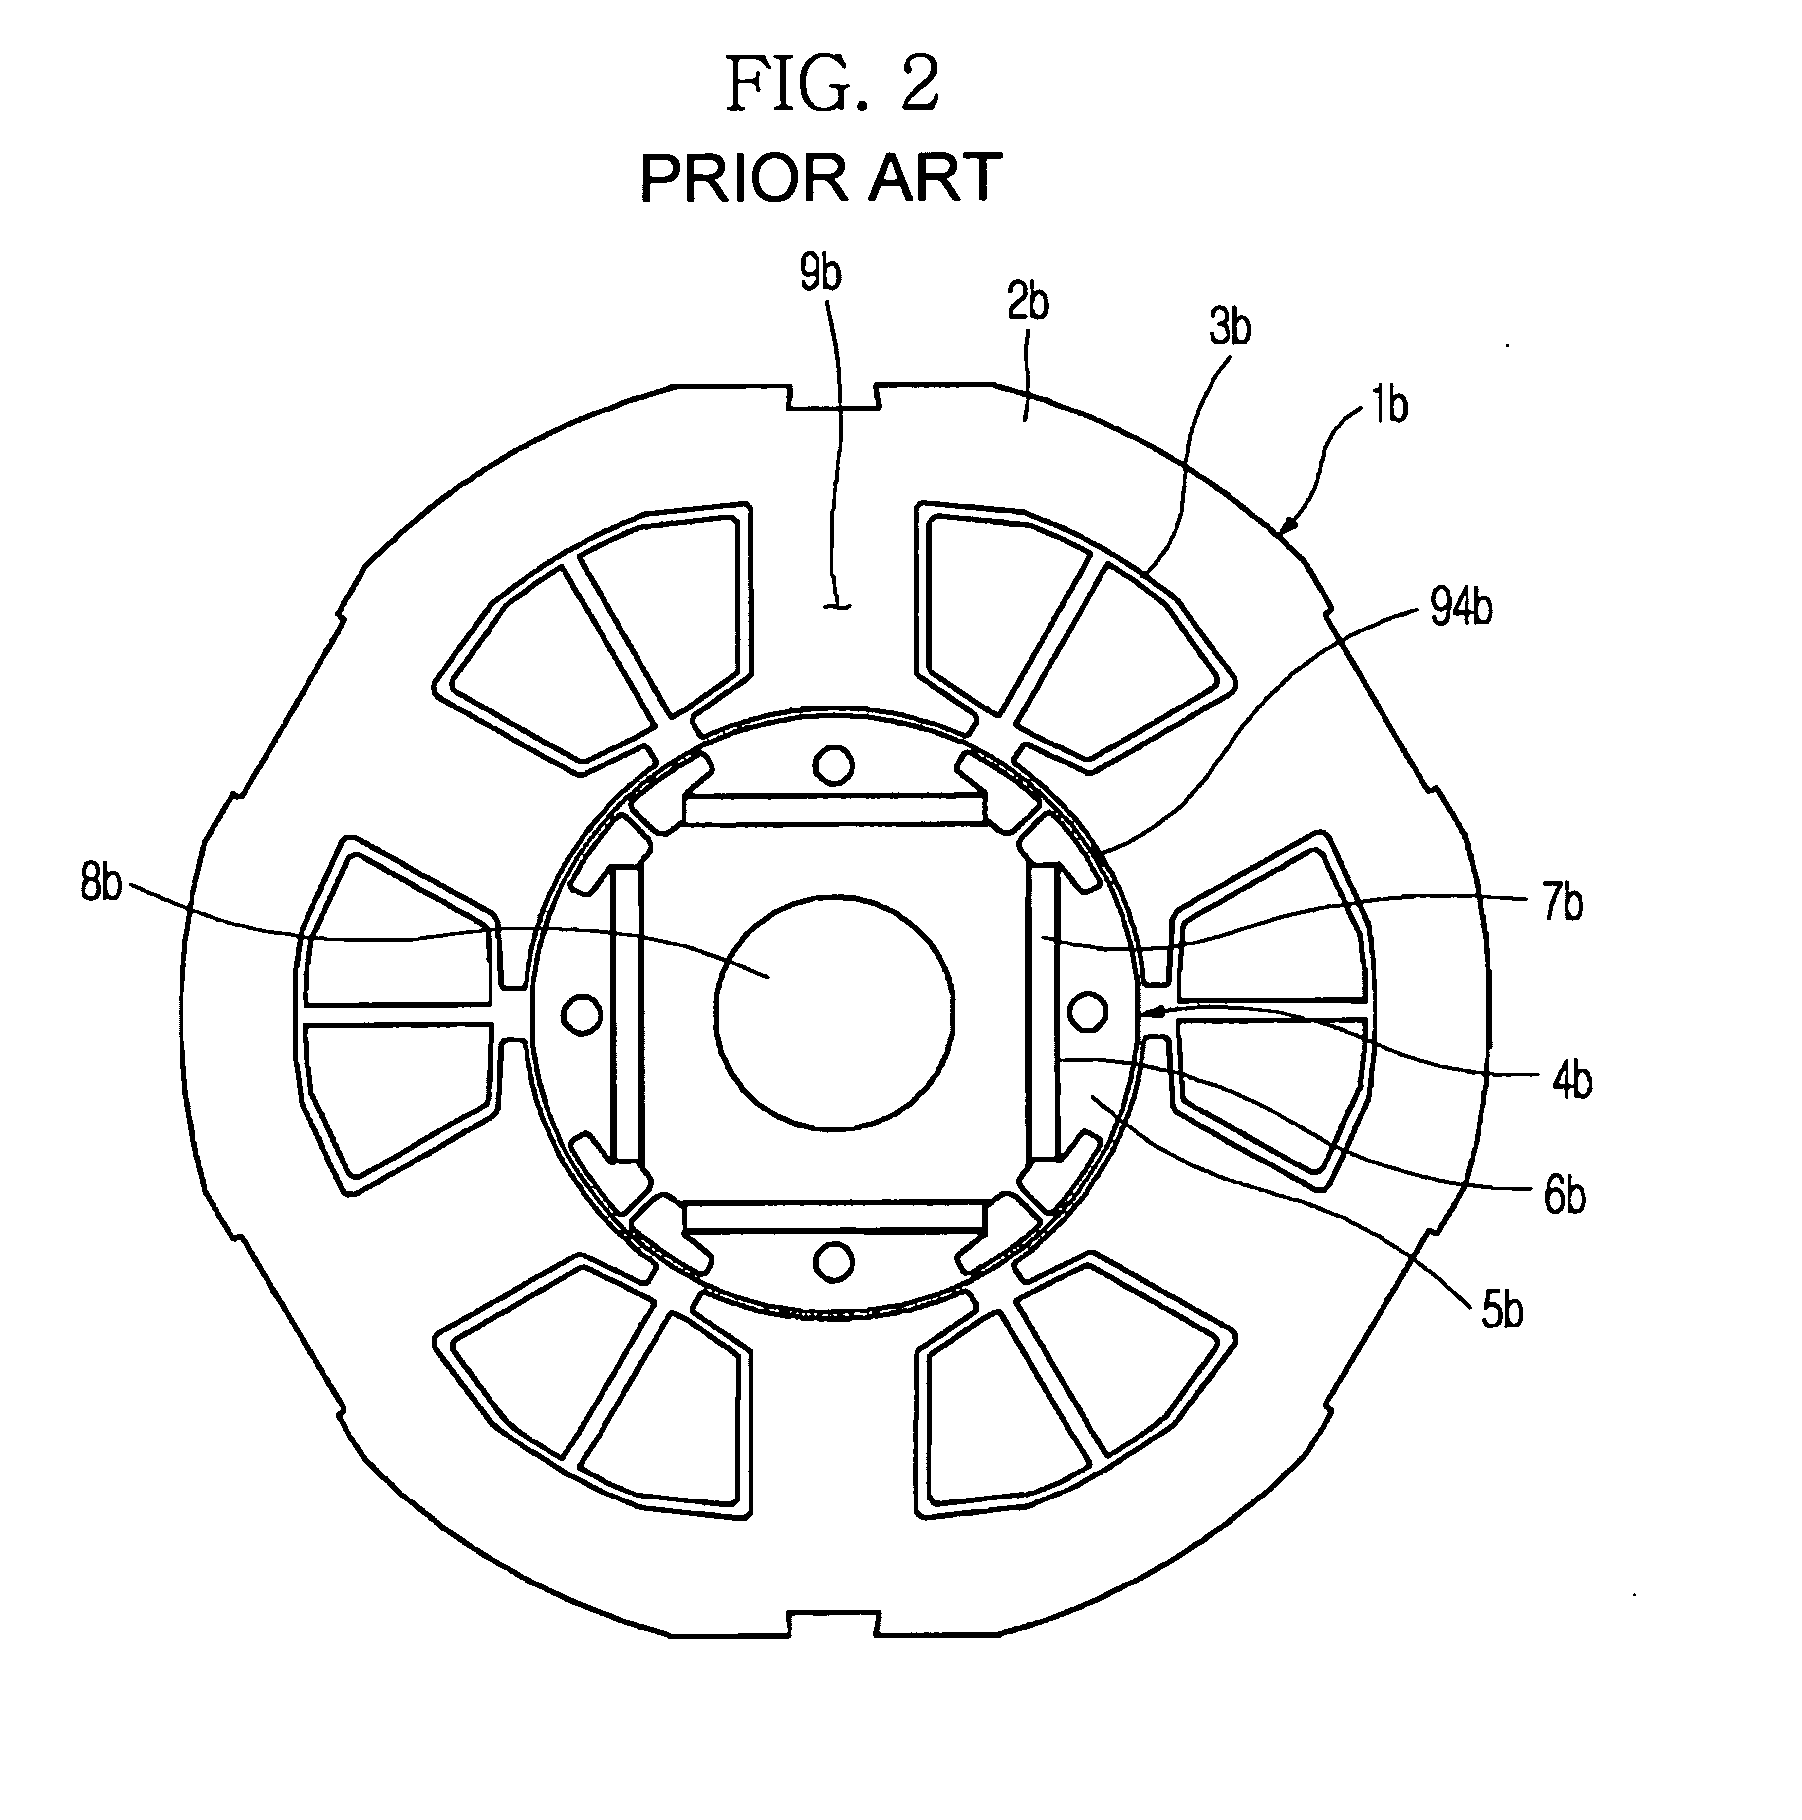 Permanent-magnet motor